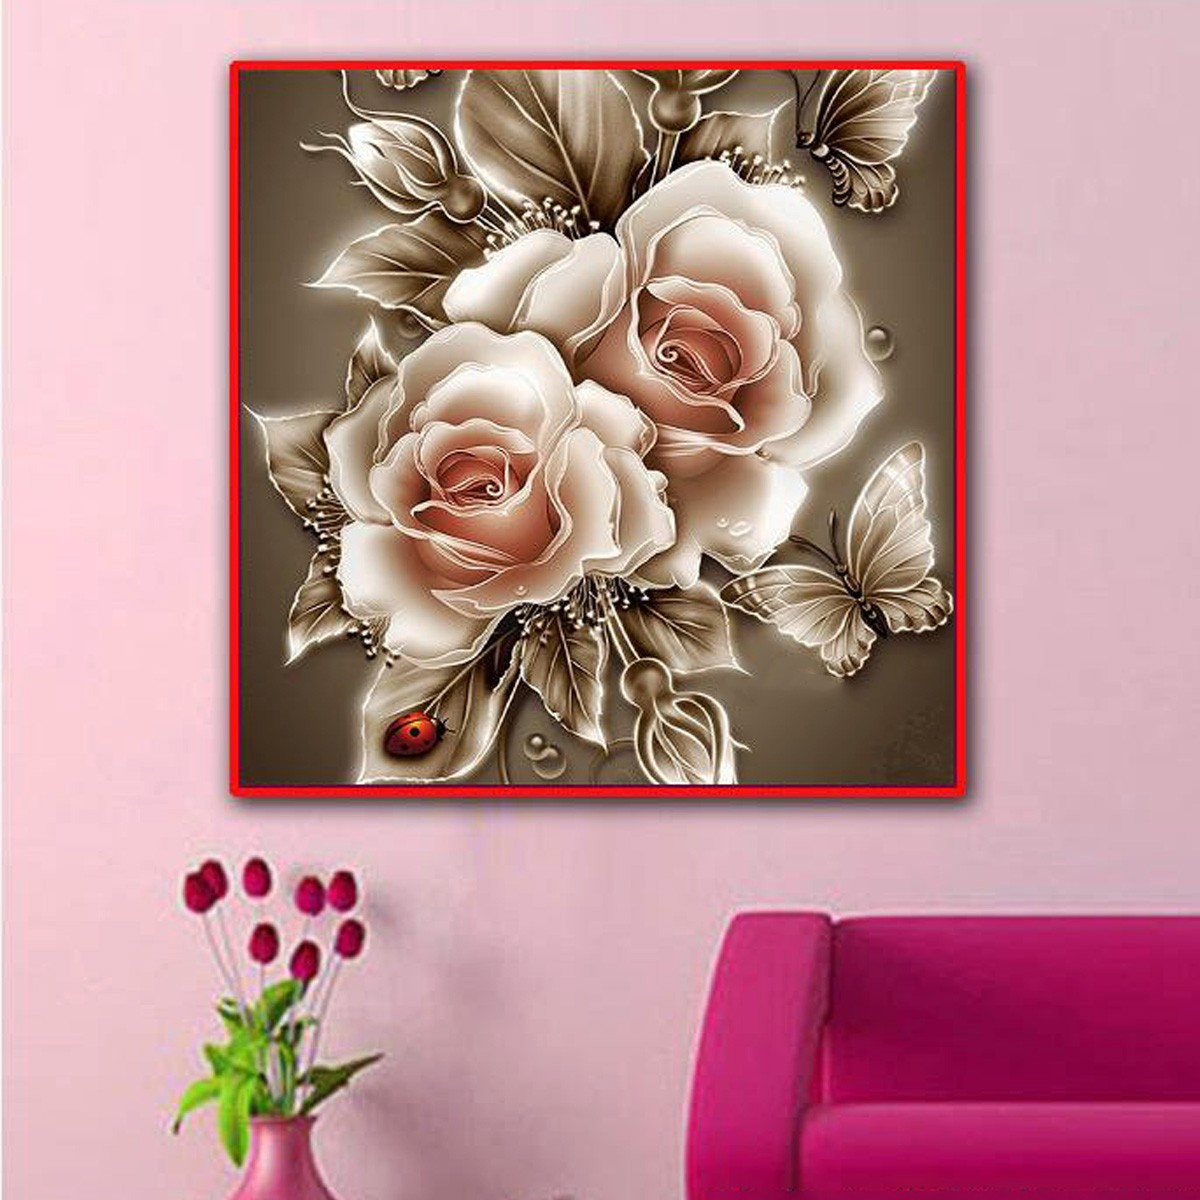 DIY-5D-Diamond-Painting-Kit-Retro-Flower-Handmade-Craft-Cross-Stitch-Embroidery-Home-Office-Wall-Dec-1350574-7